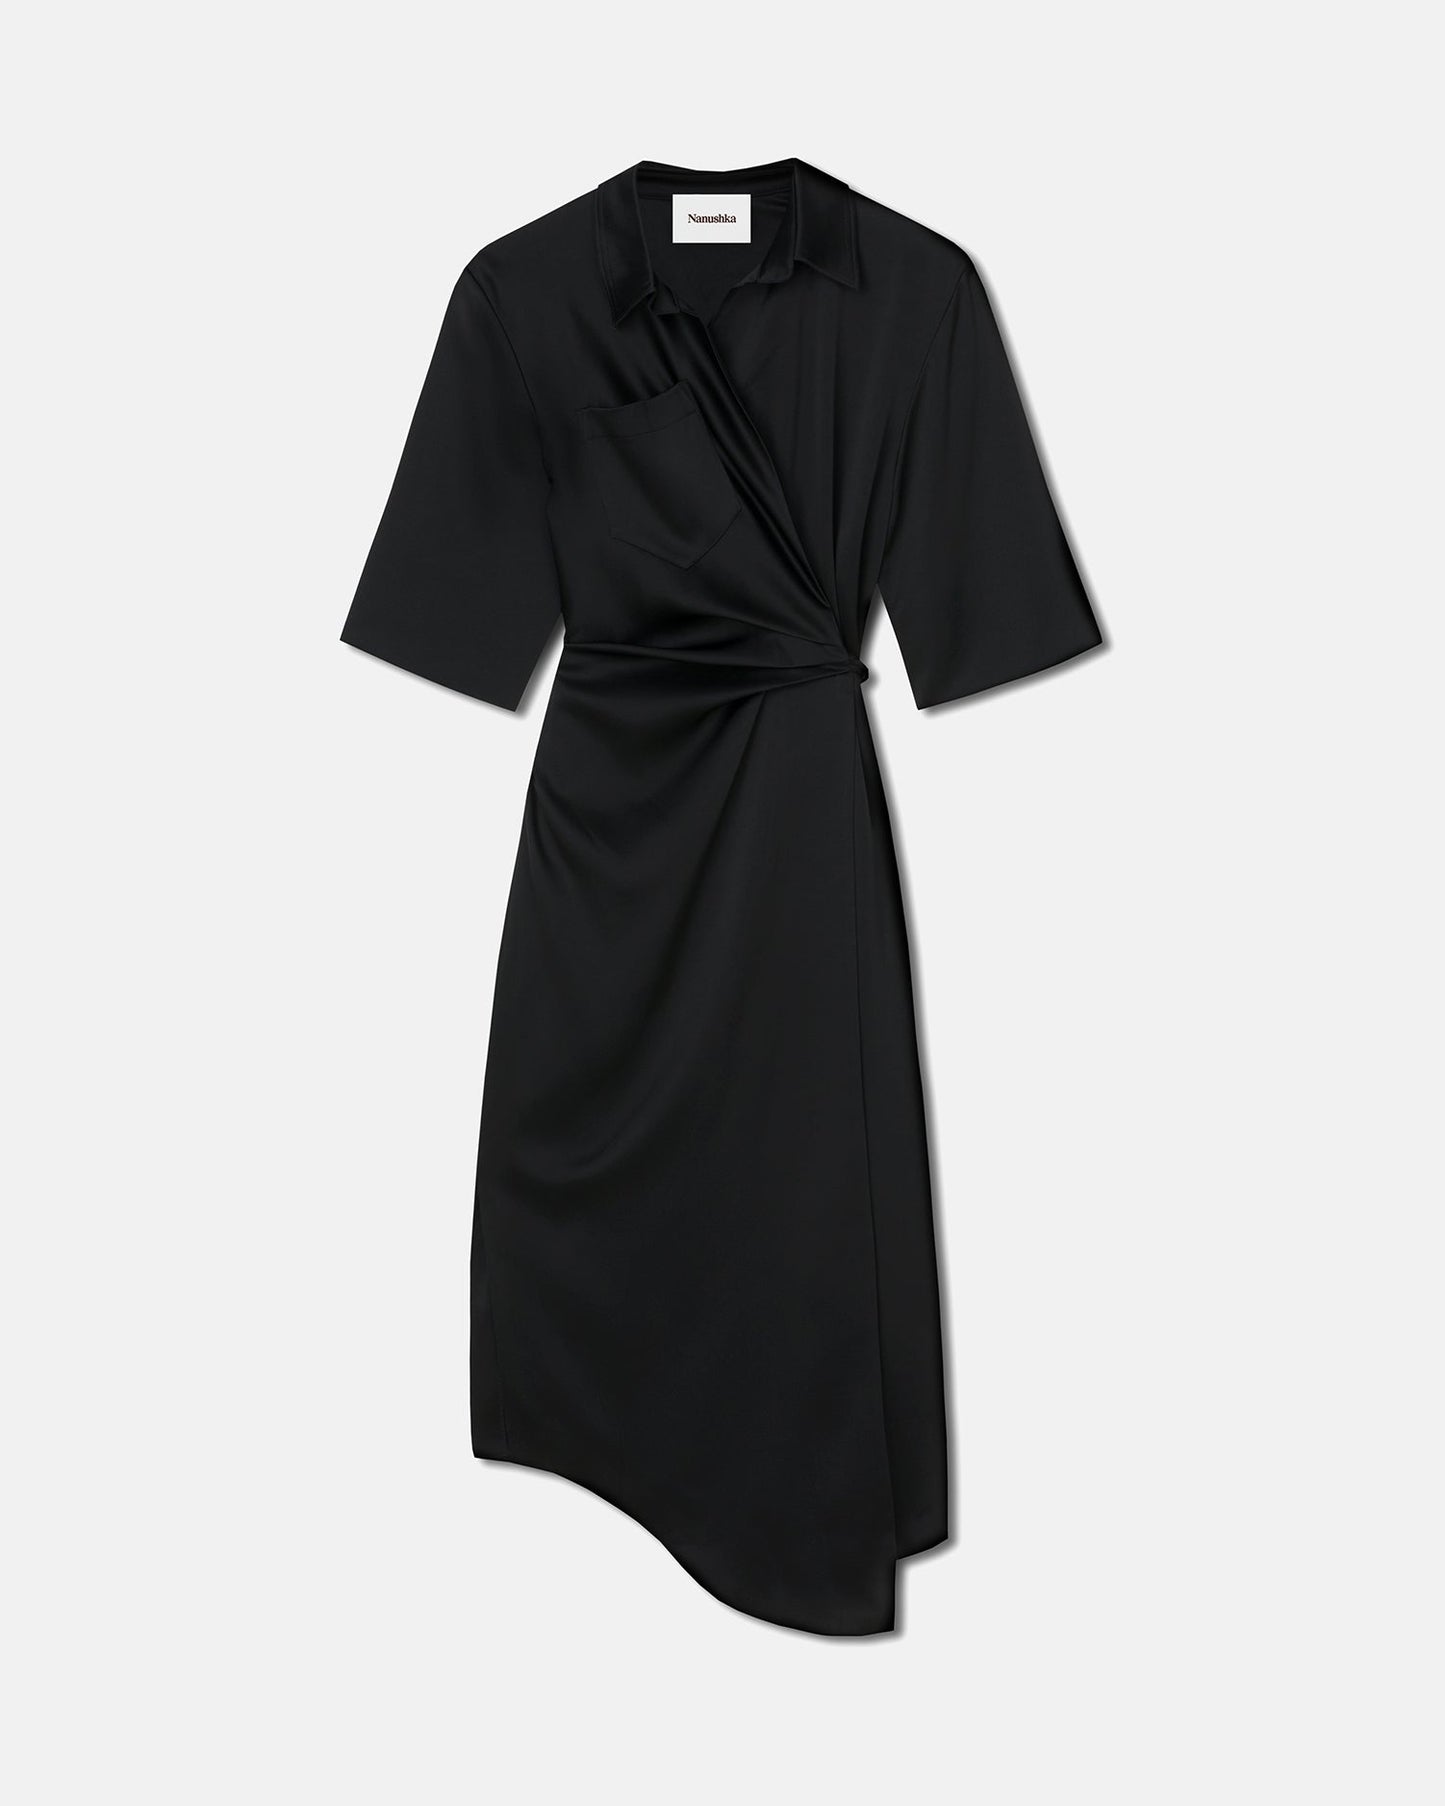 Lais - Draped Front Shirt Dress - Black